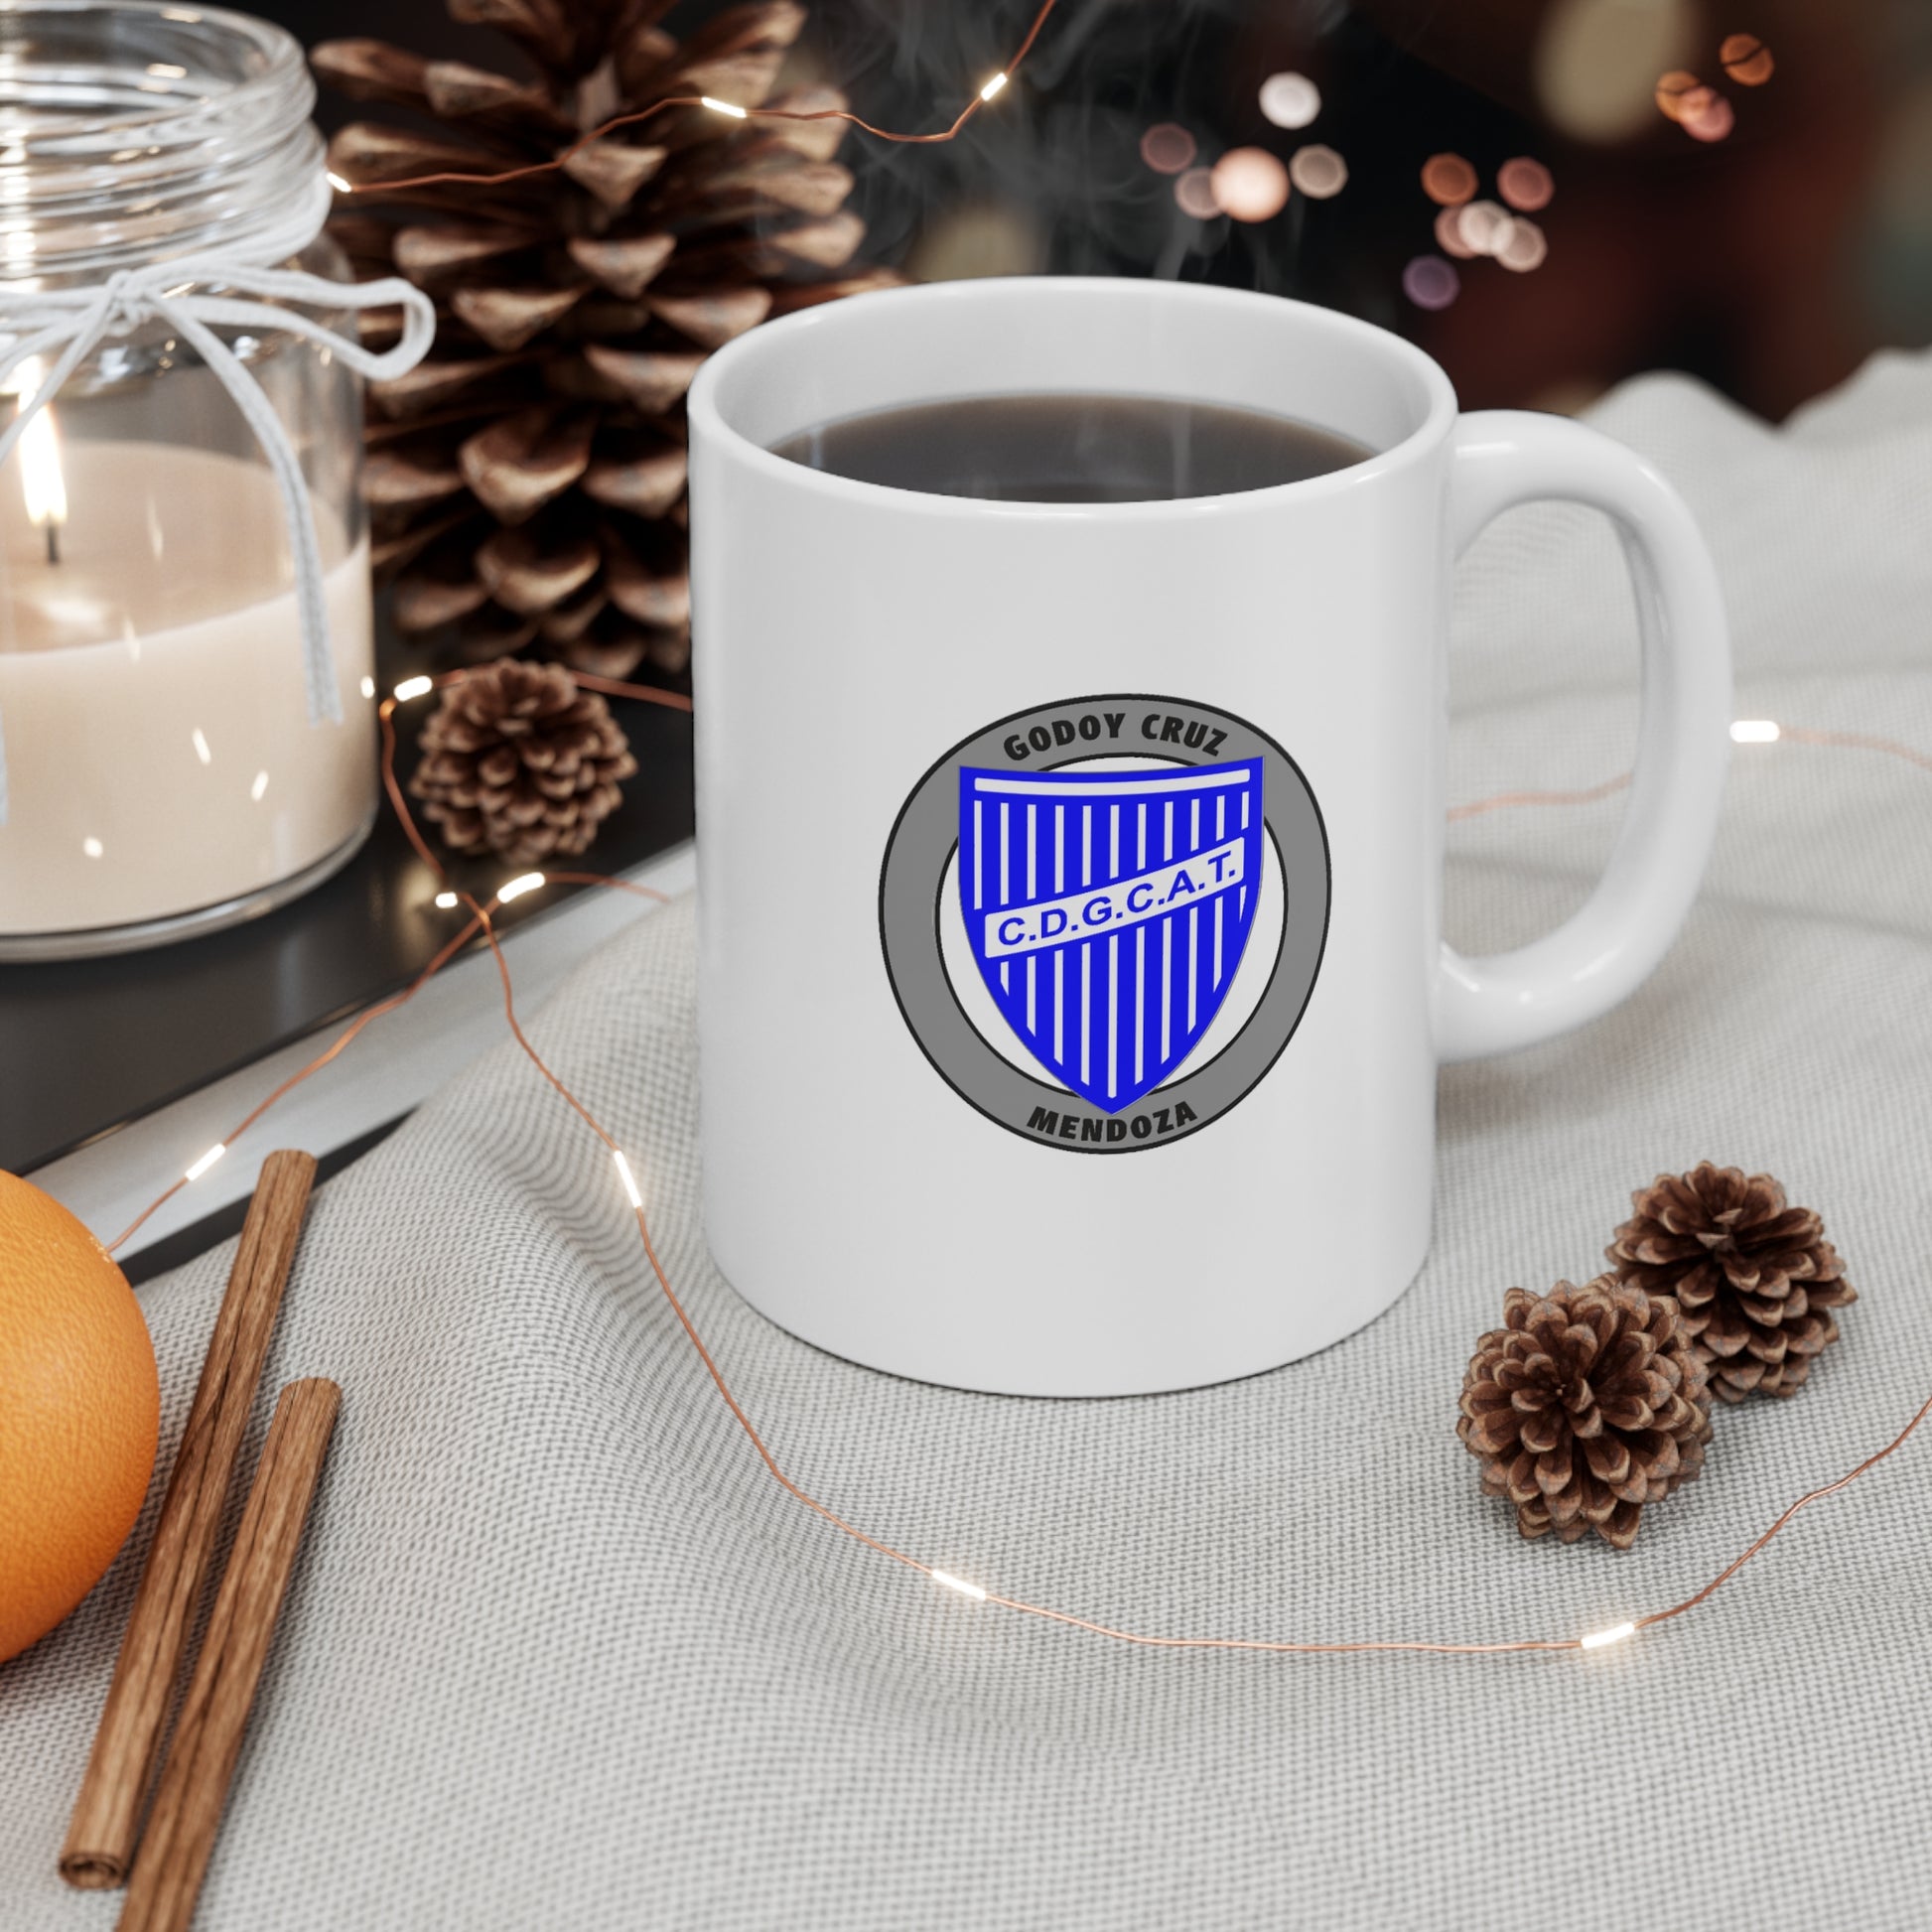 Club Deportivo Godoy Cruz Antonio Tomba de Mendoza 2019 Ceramic Mug